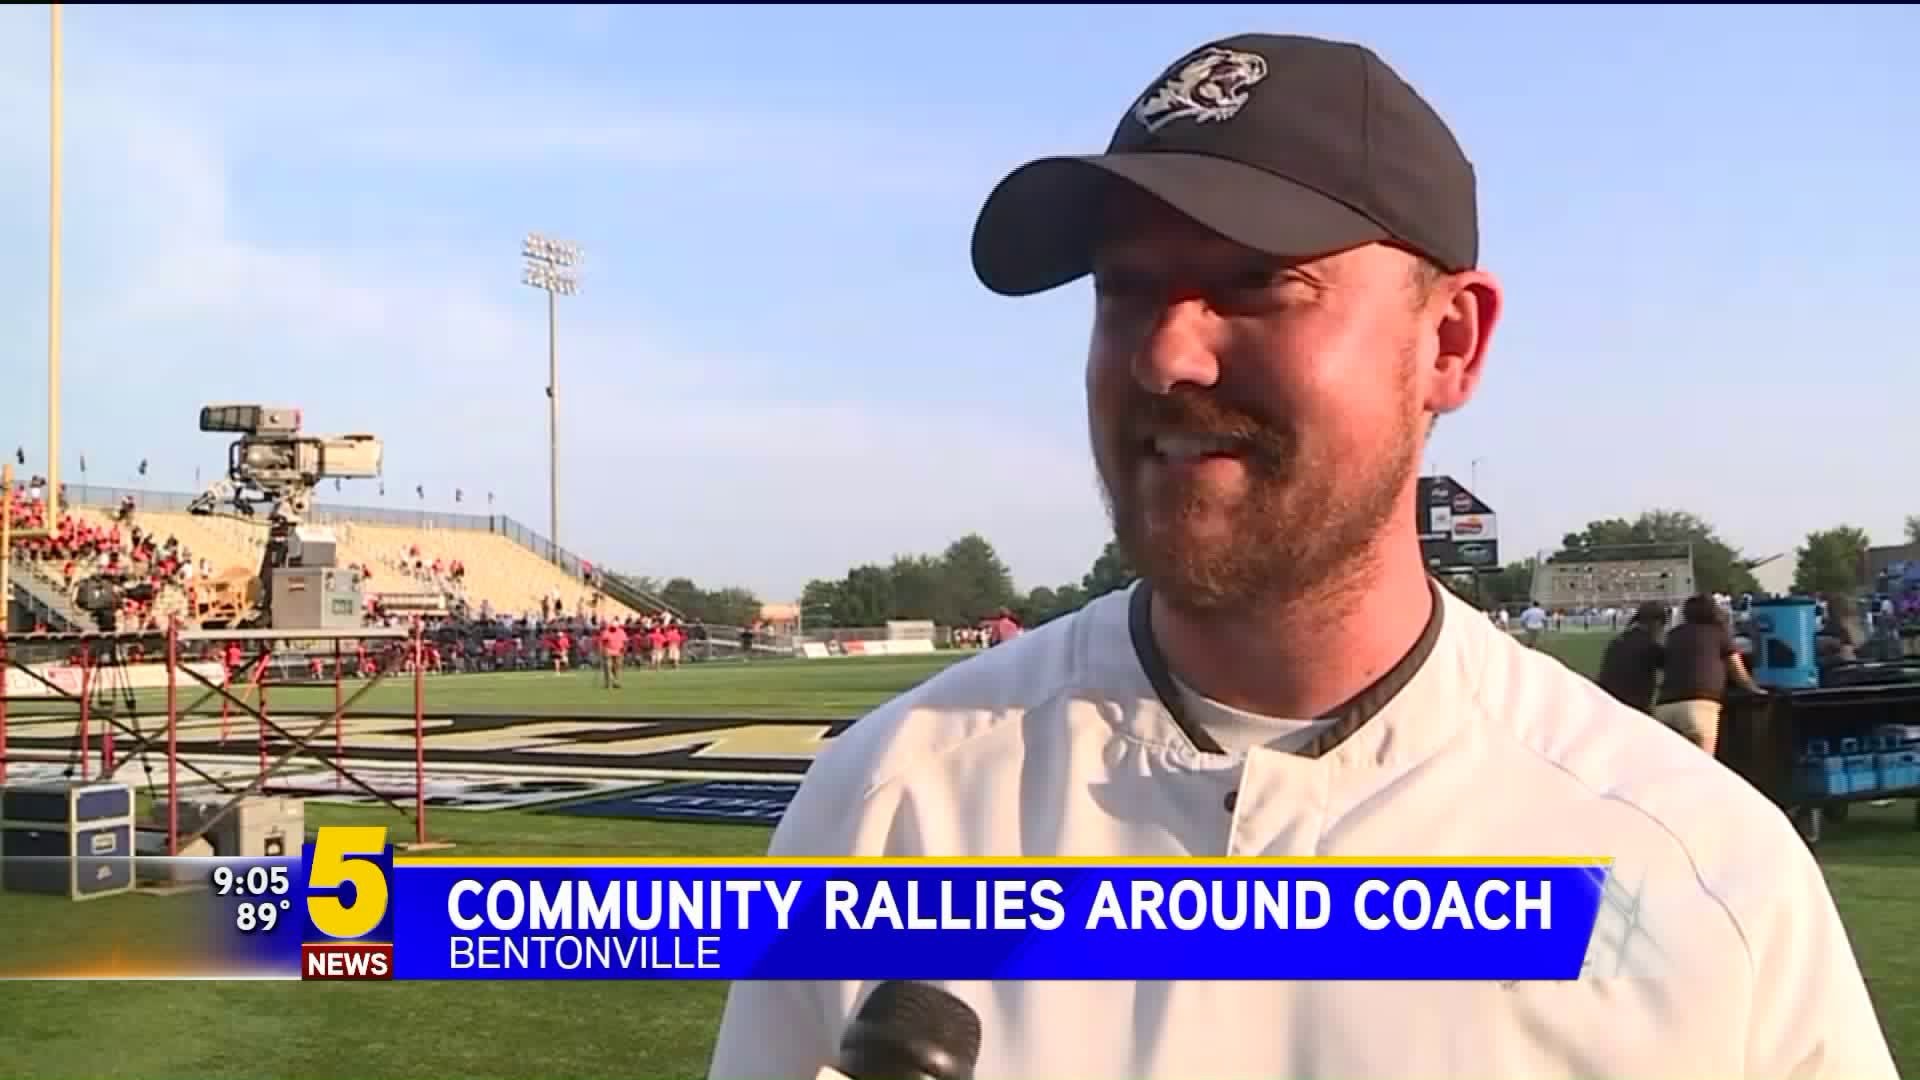 Bentonville Coach Event